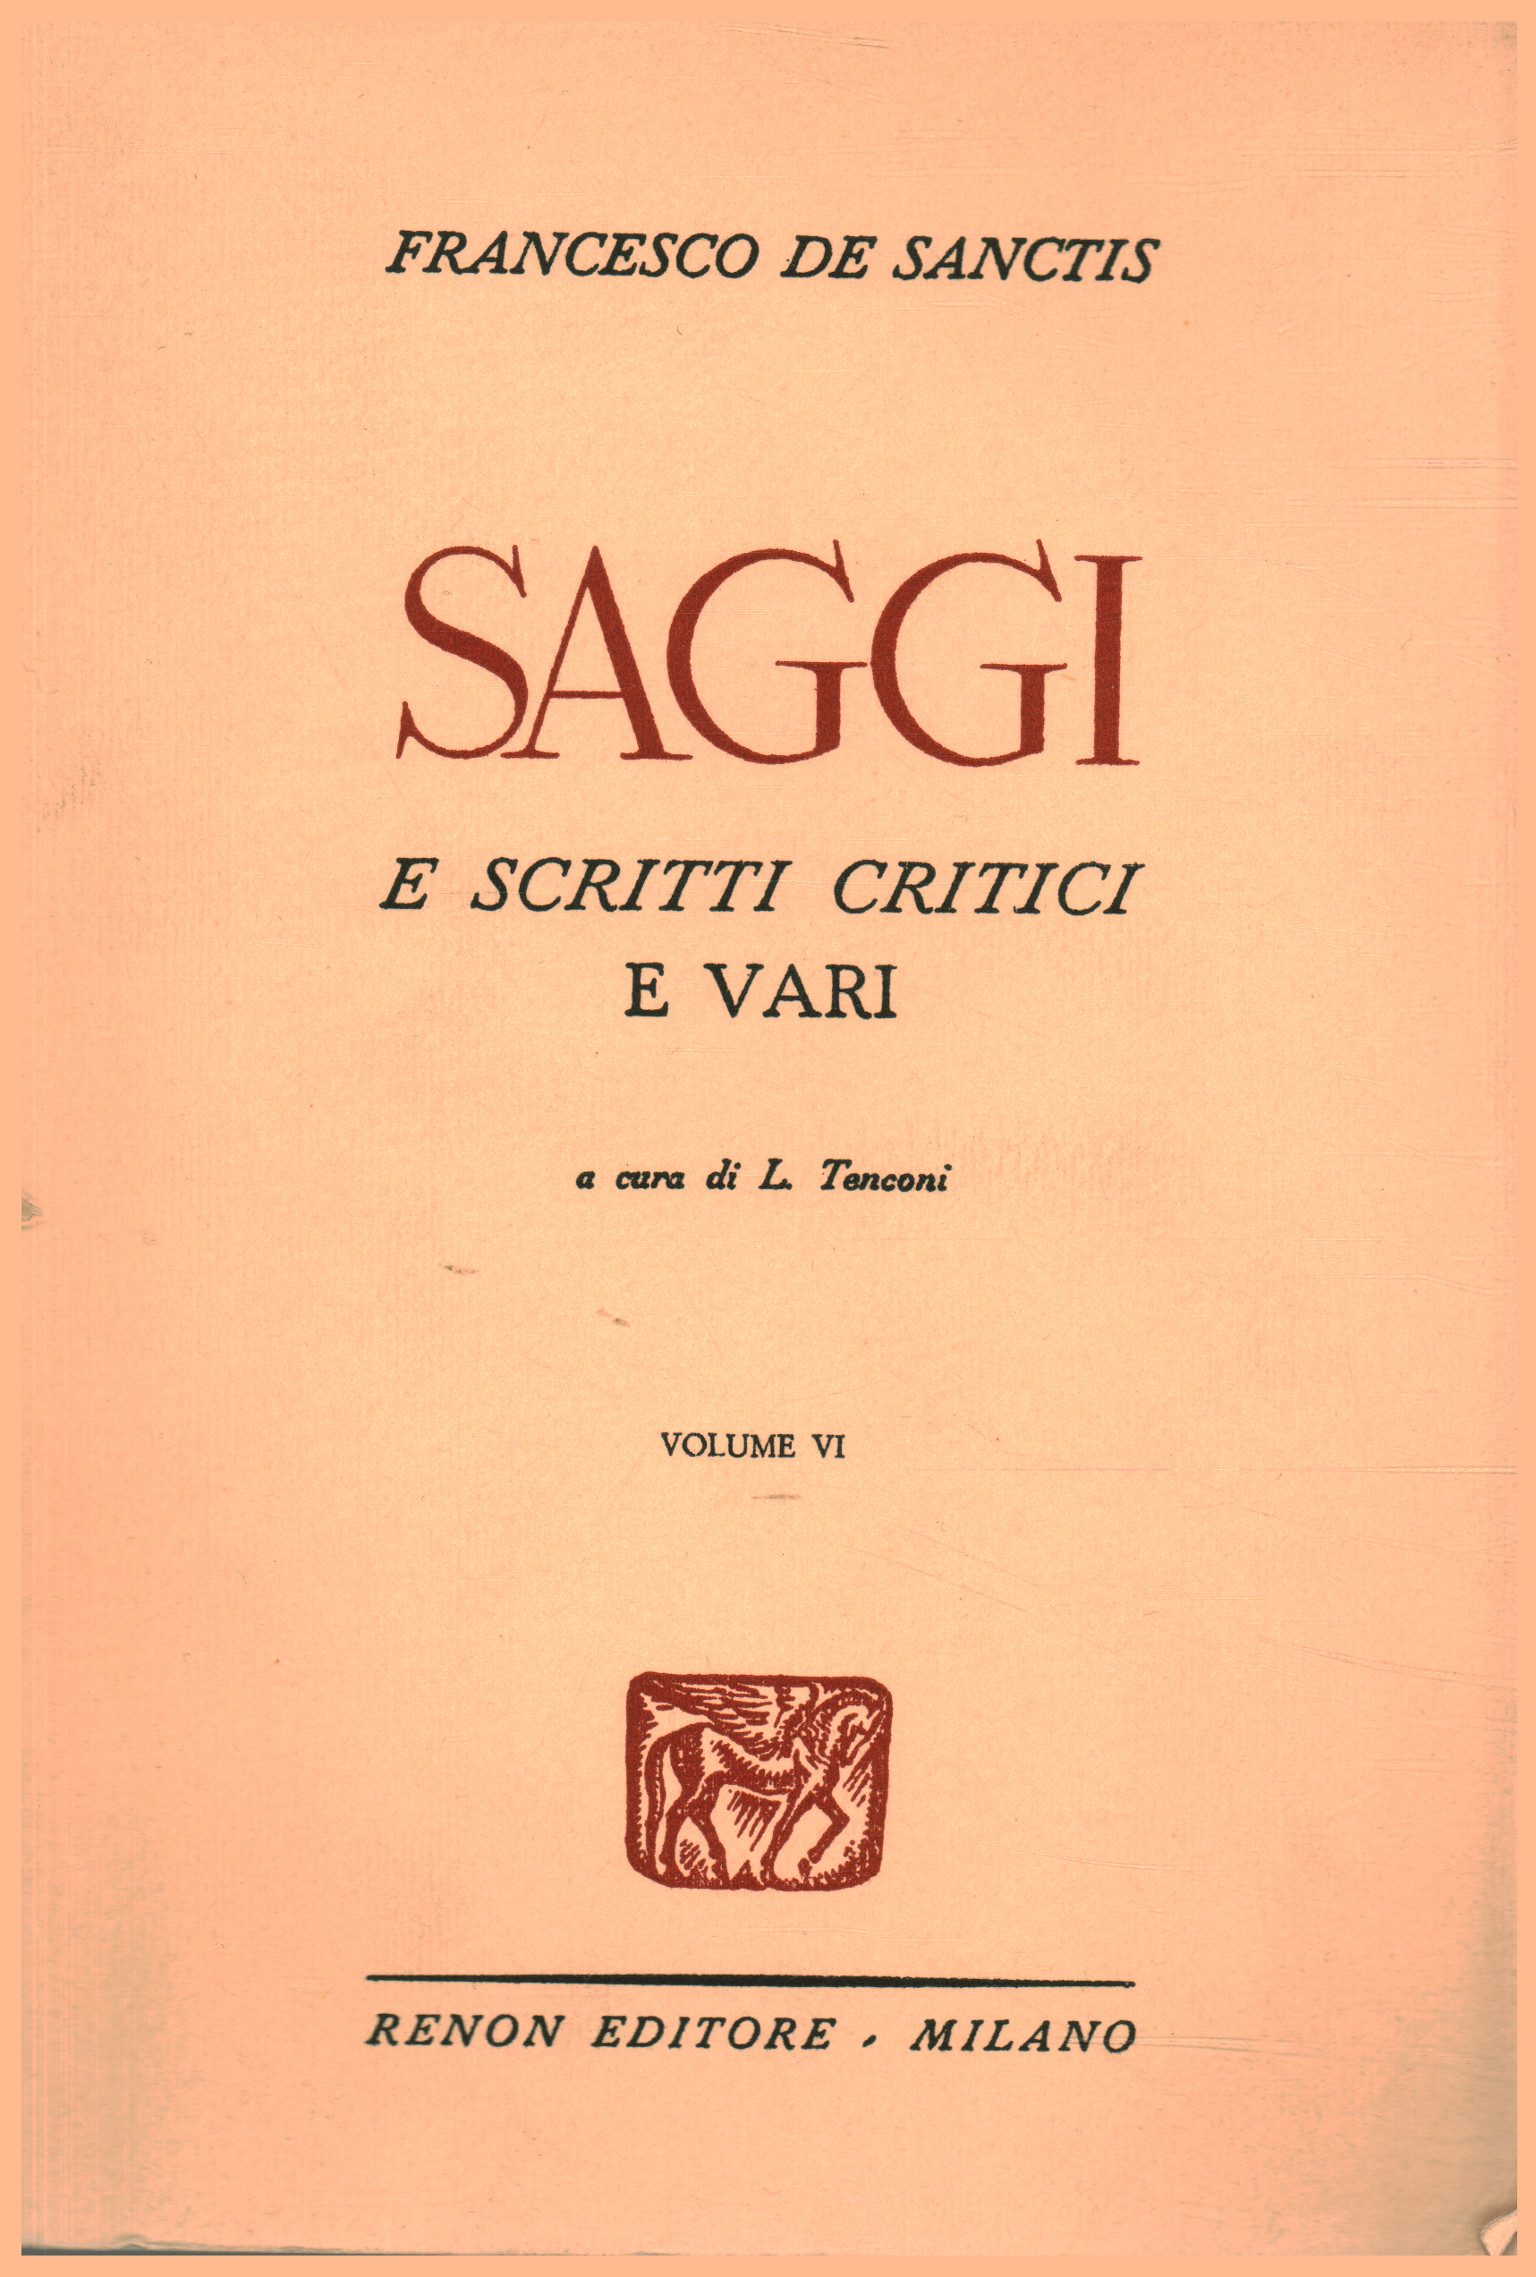 Saggi e scritti critici e vari. Volume sesto, Francesco De Sanctis